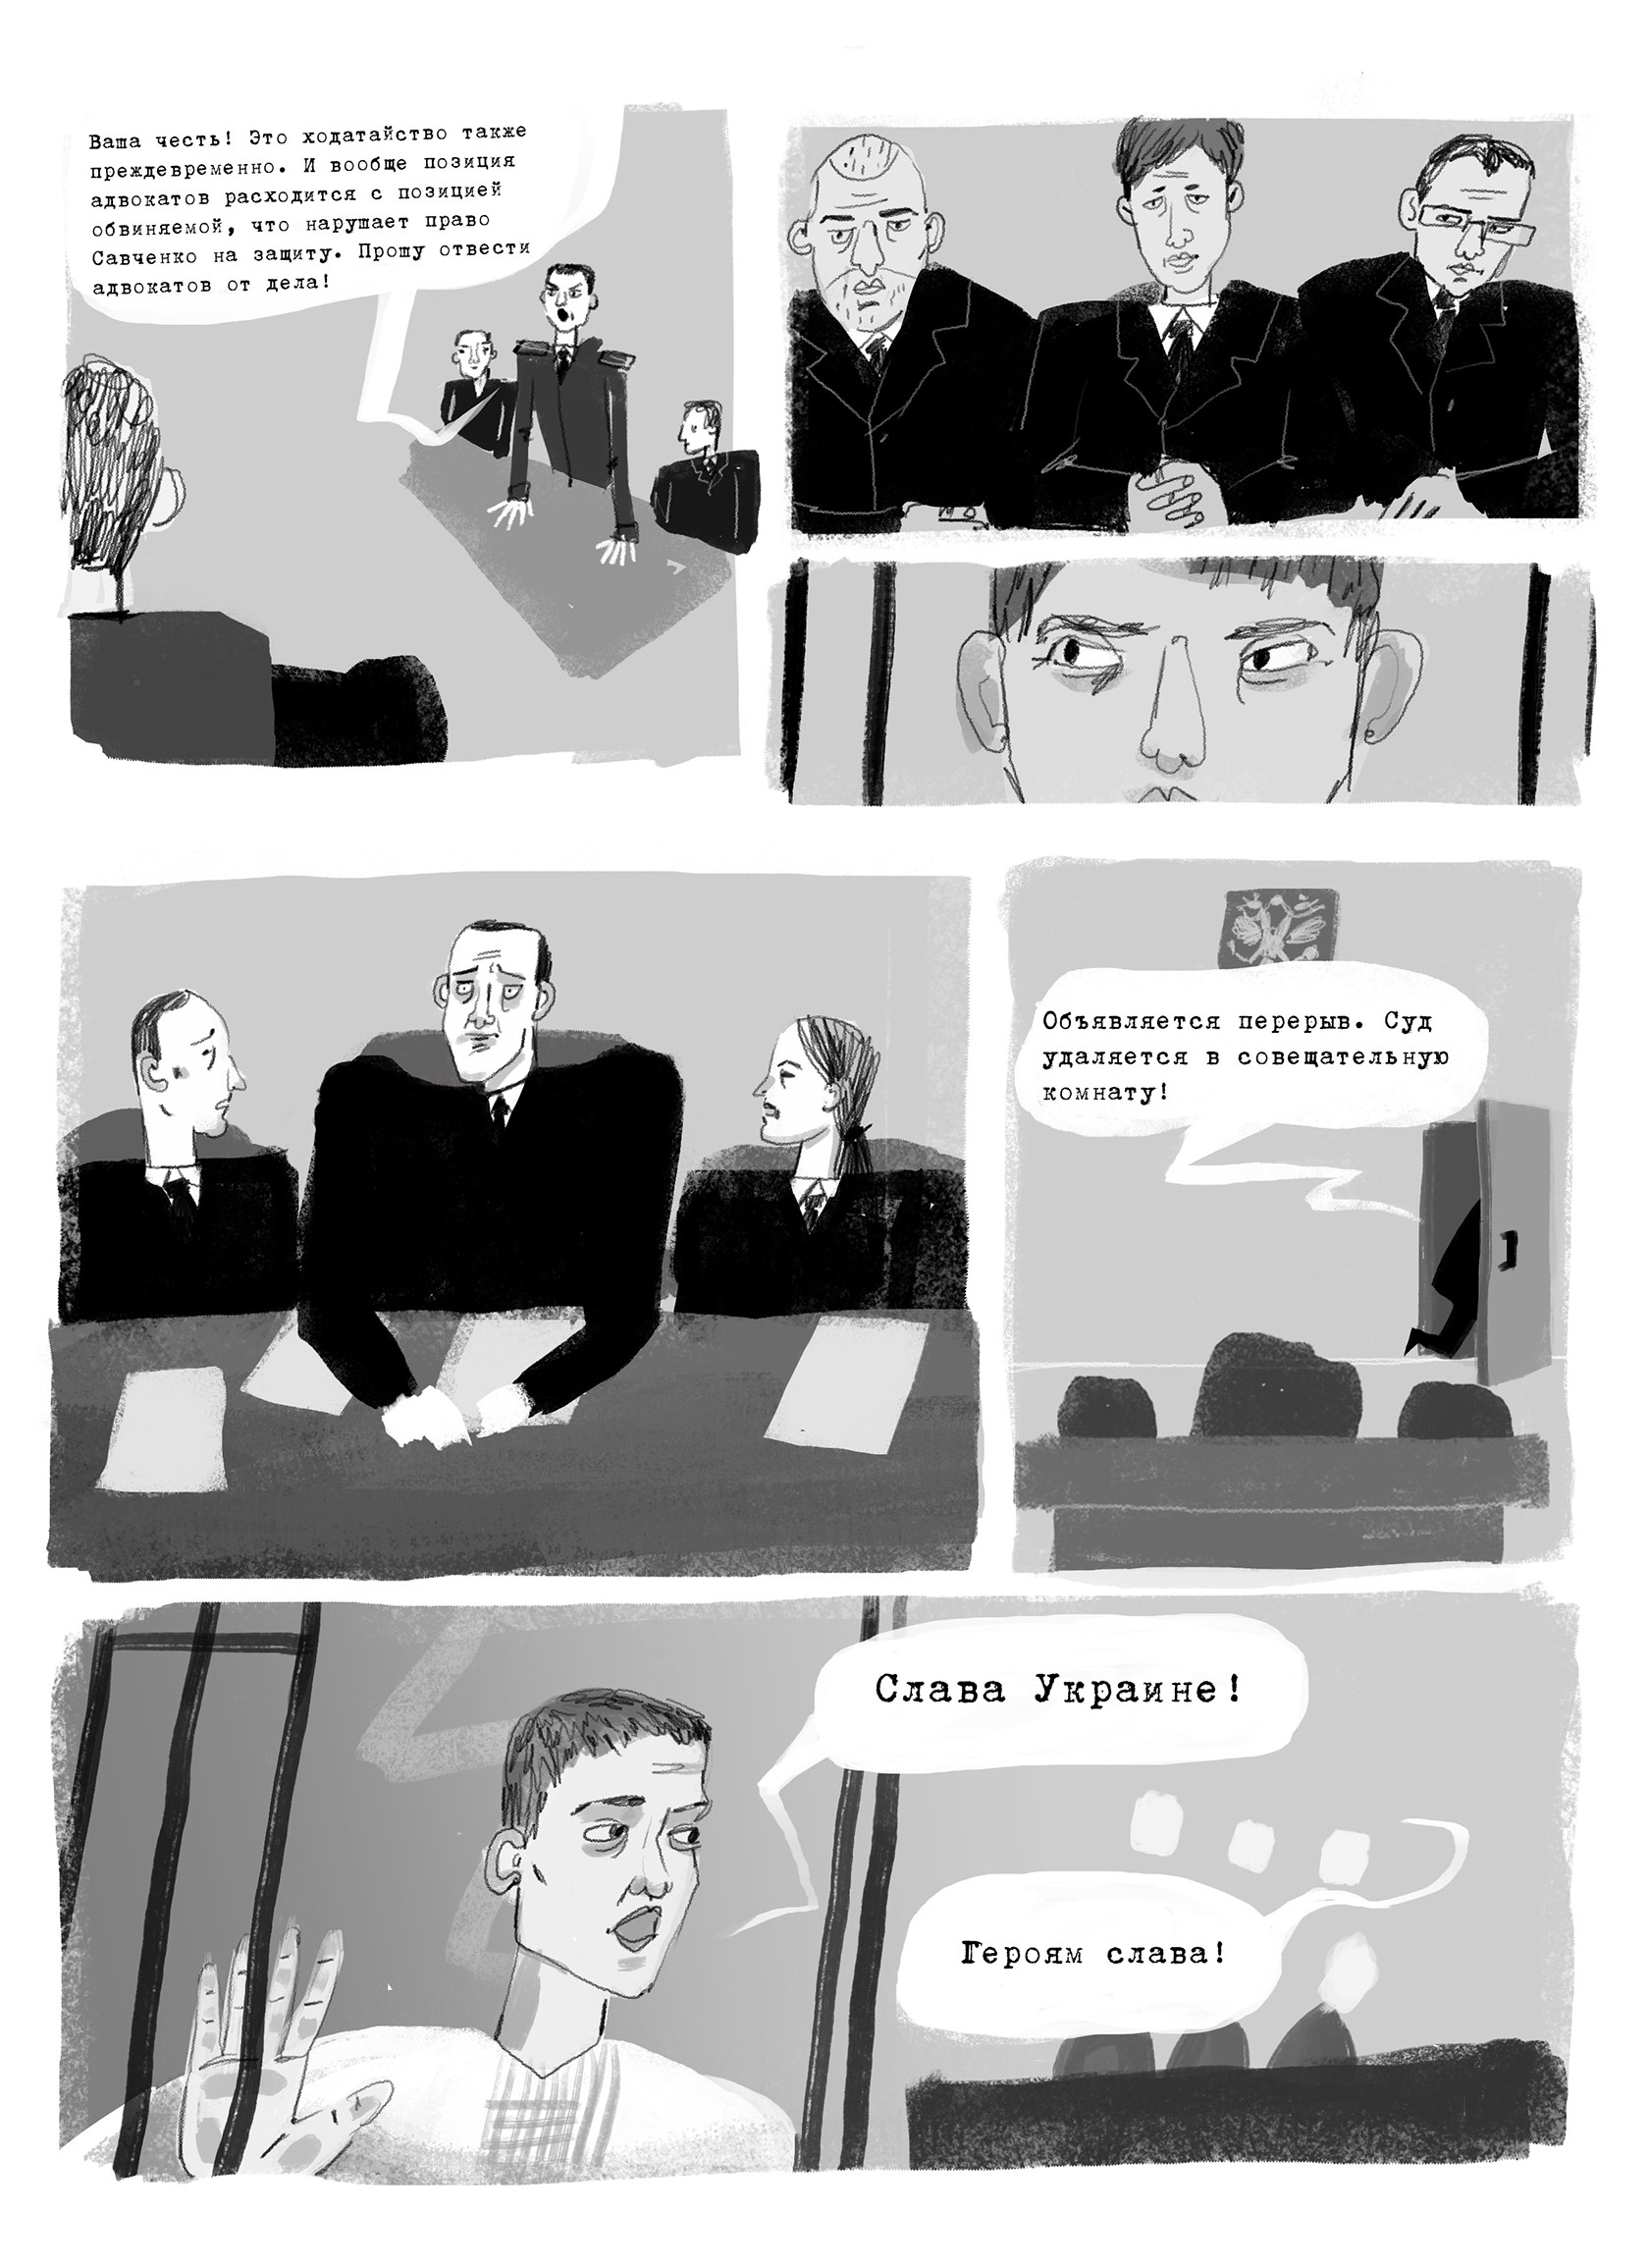 В Росії Савченко стала героїнею коміксу - фото 3